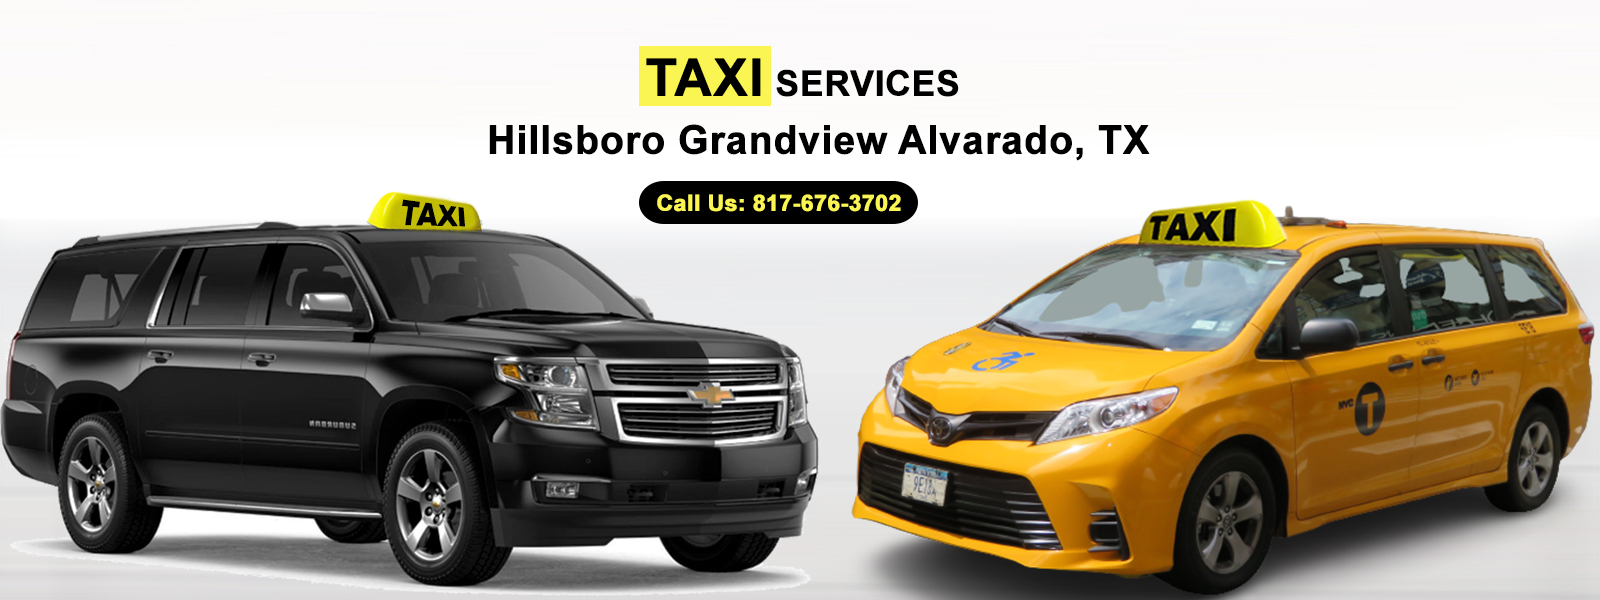 Hillsboro-Grandview-Alvarado-Banner-New